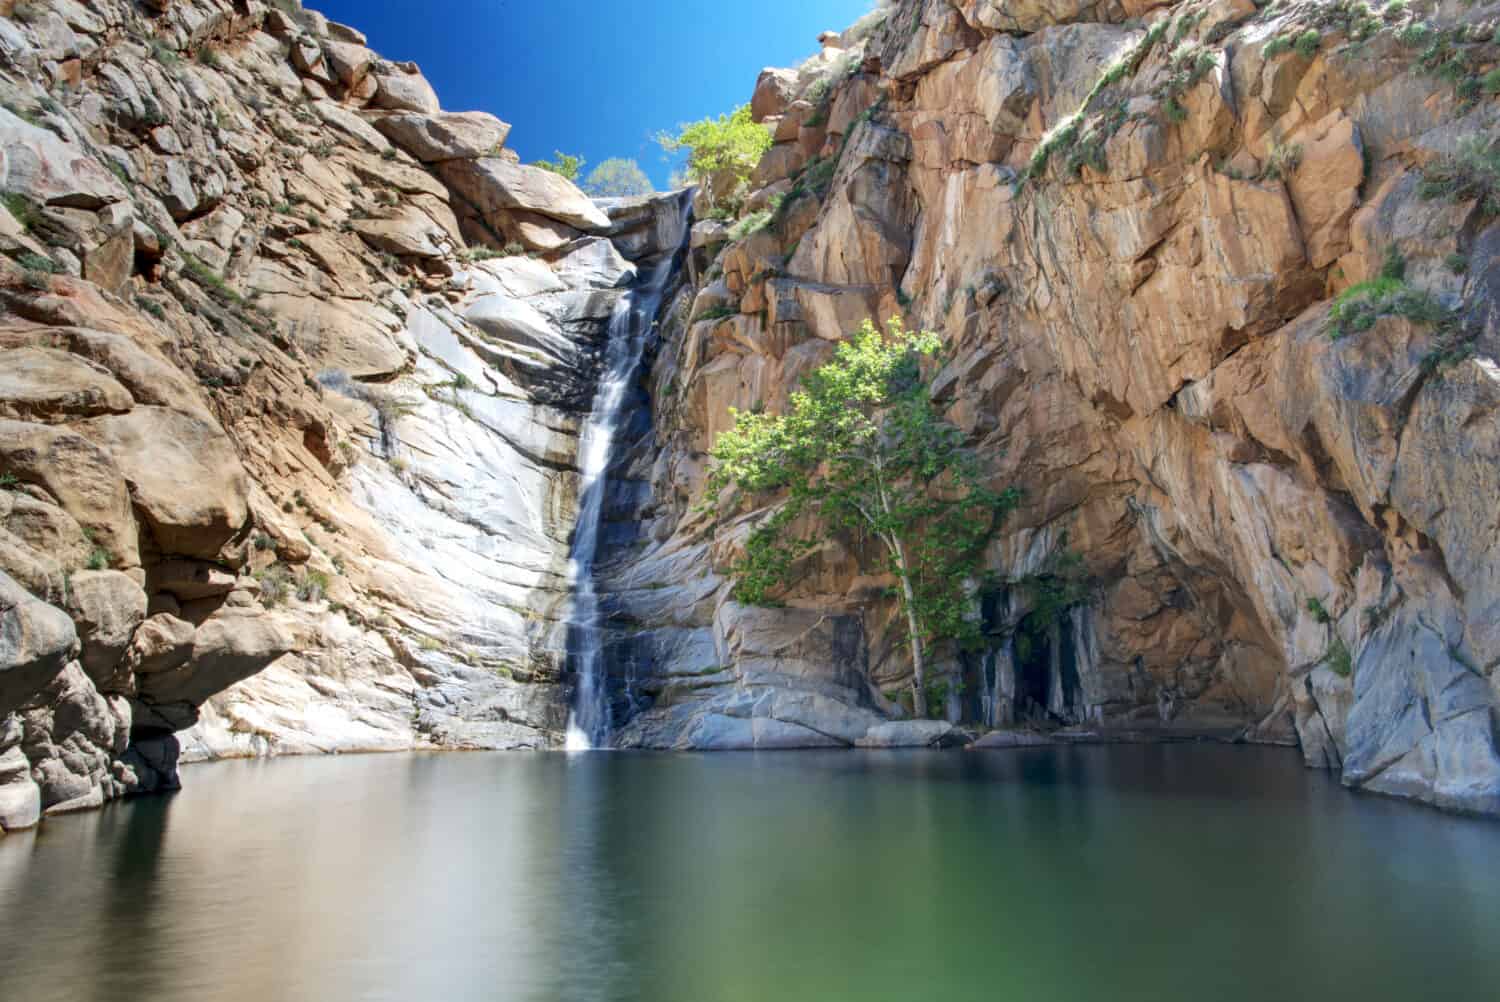 Cedar Creek Falls (Devil's Punchbowl) in San Diego, California, USA